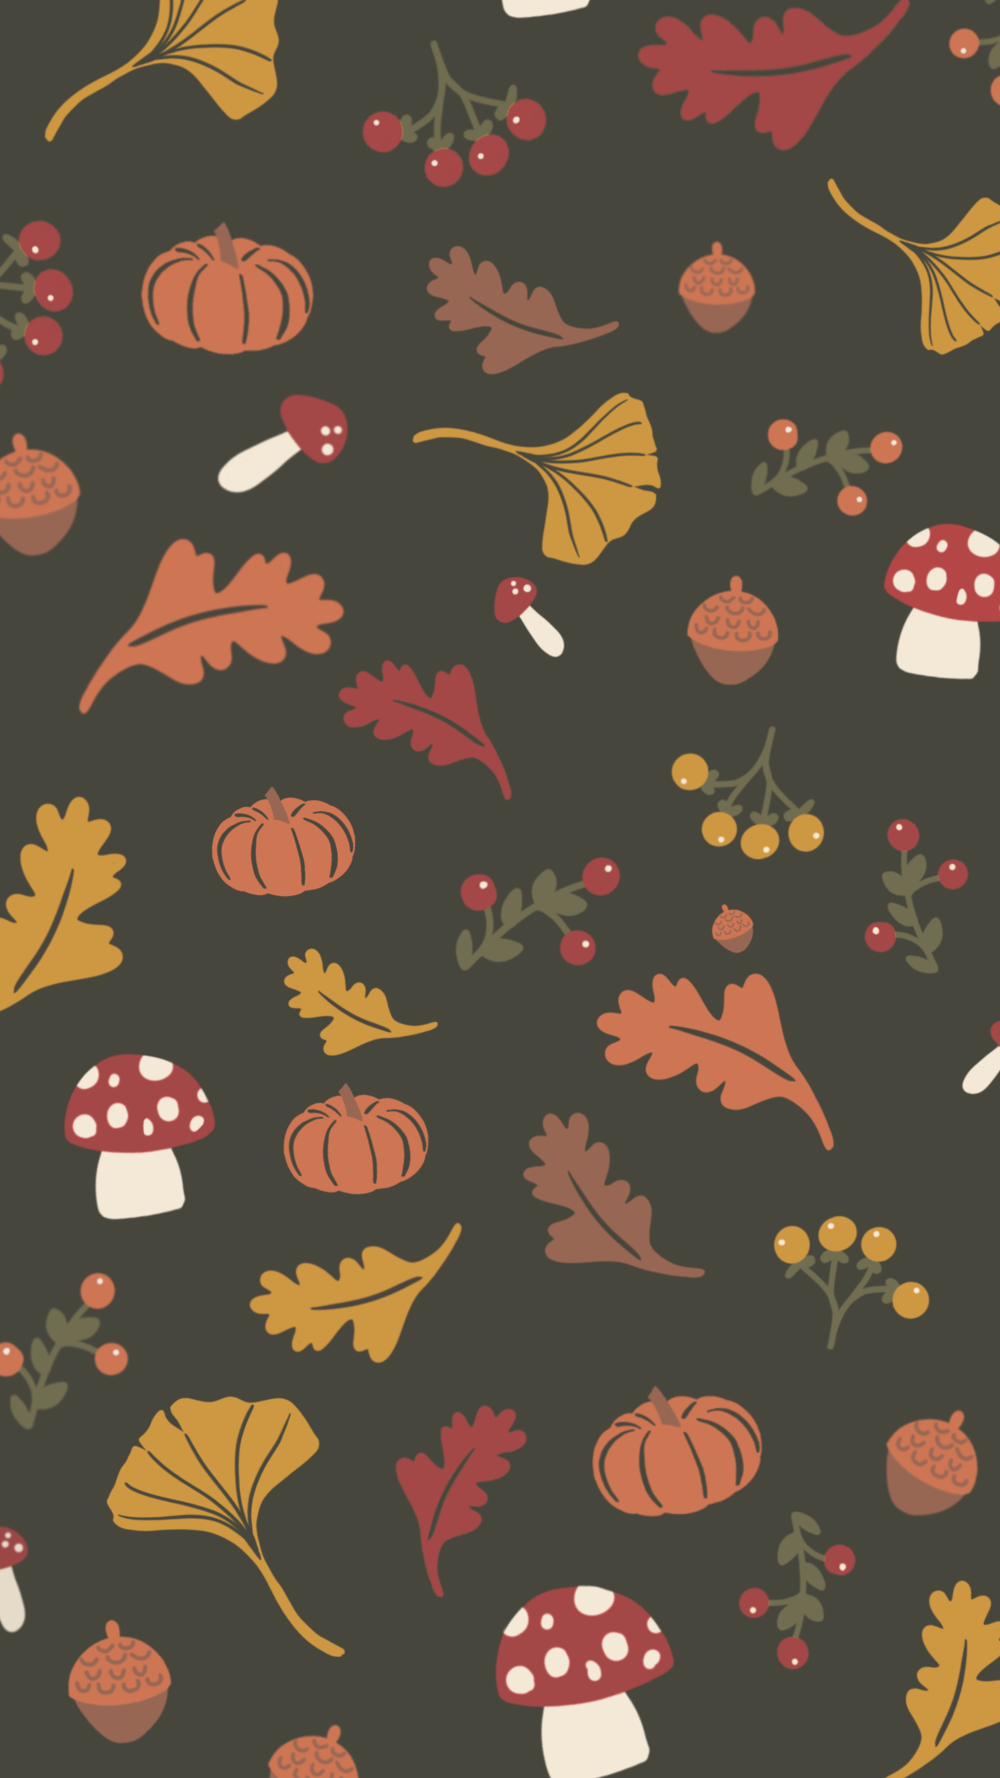 Free Seasonal Wallpaper for Christmas and Thanksgiving